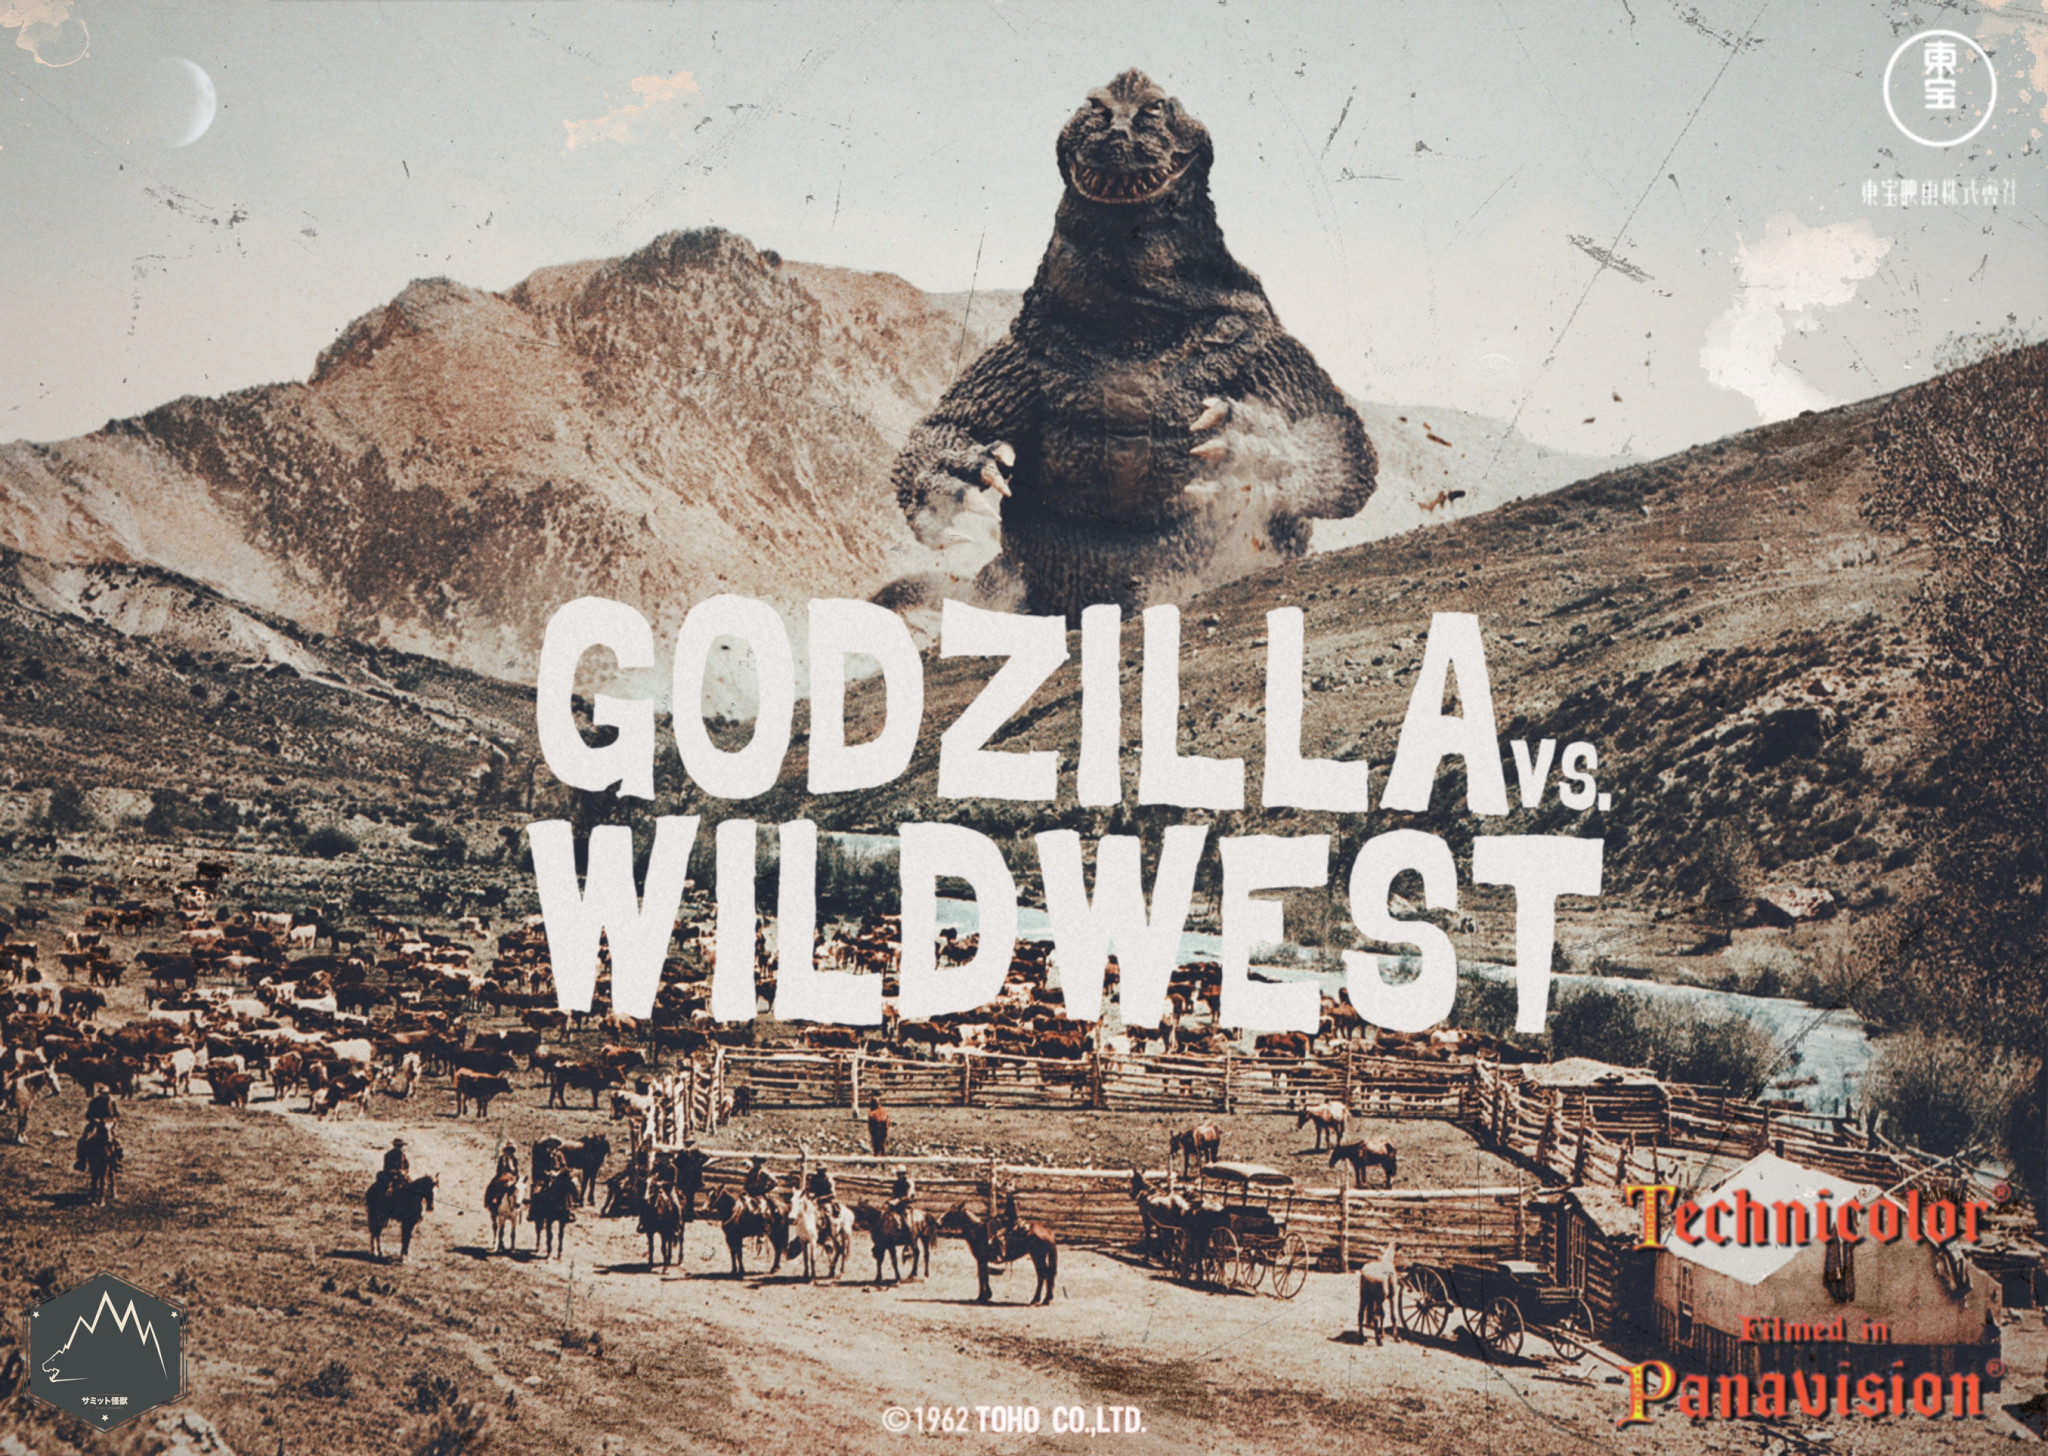 Godzilla vs WildWest